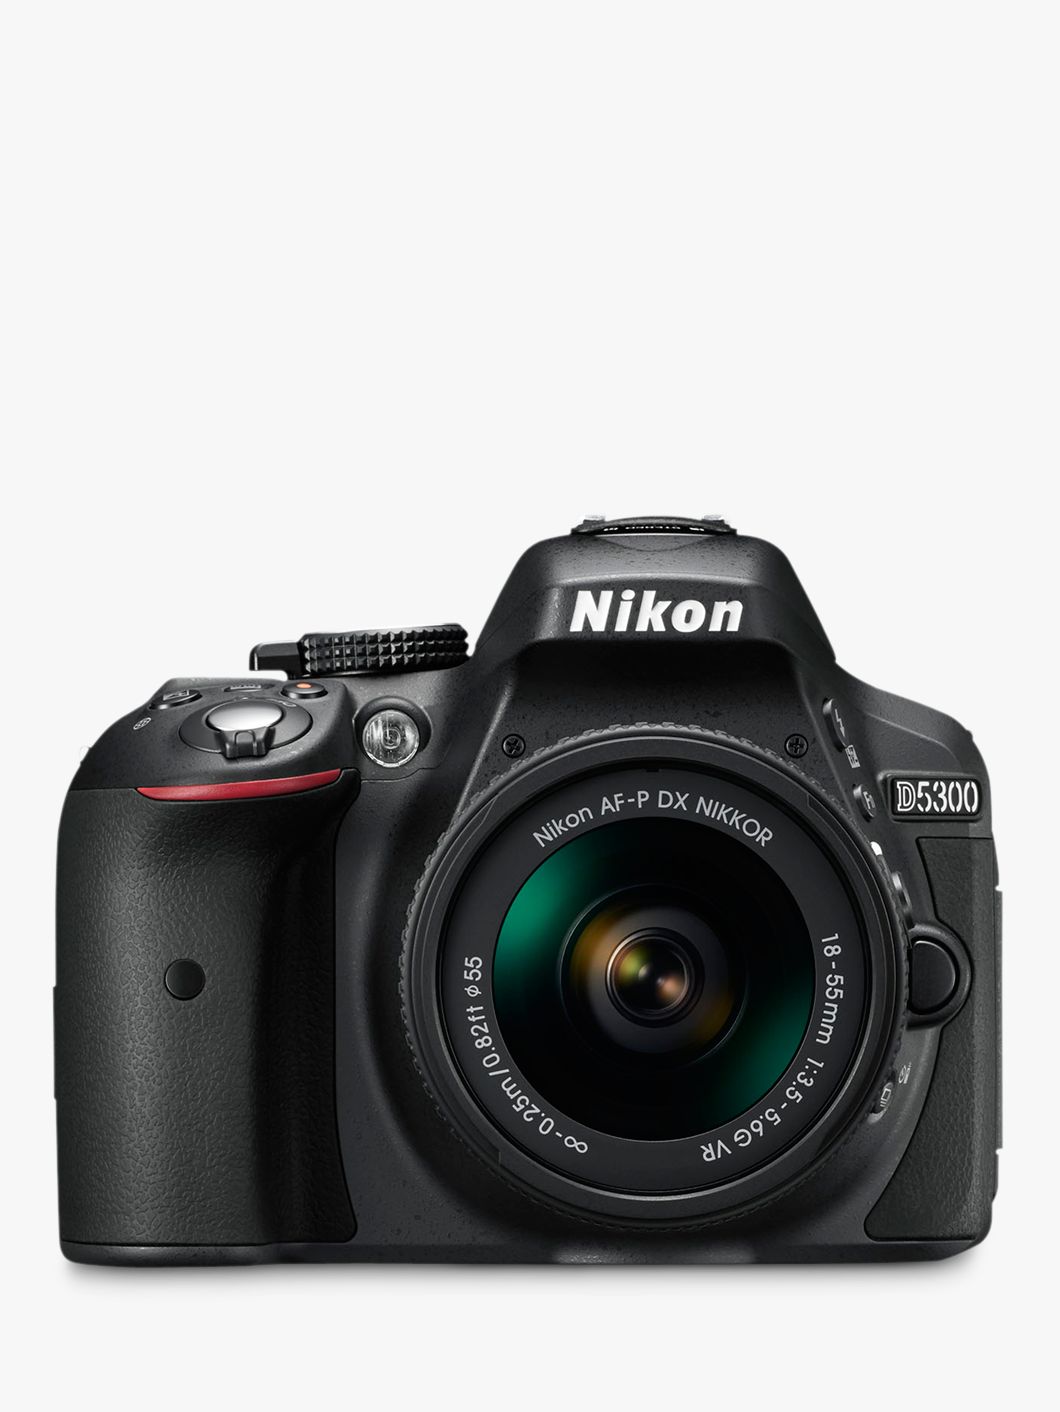 Nikon D5300 Digital SLR Camera with 18-55mm VR Lens, HD 1080p, 24.2MP, Wi-Fi, 3.2 Screen